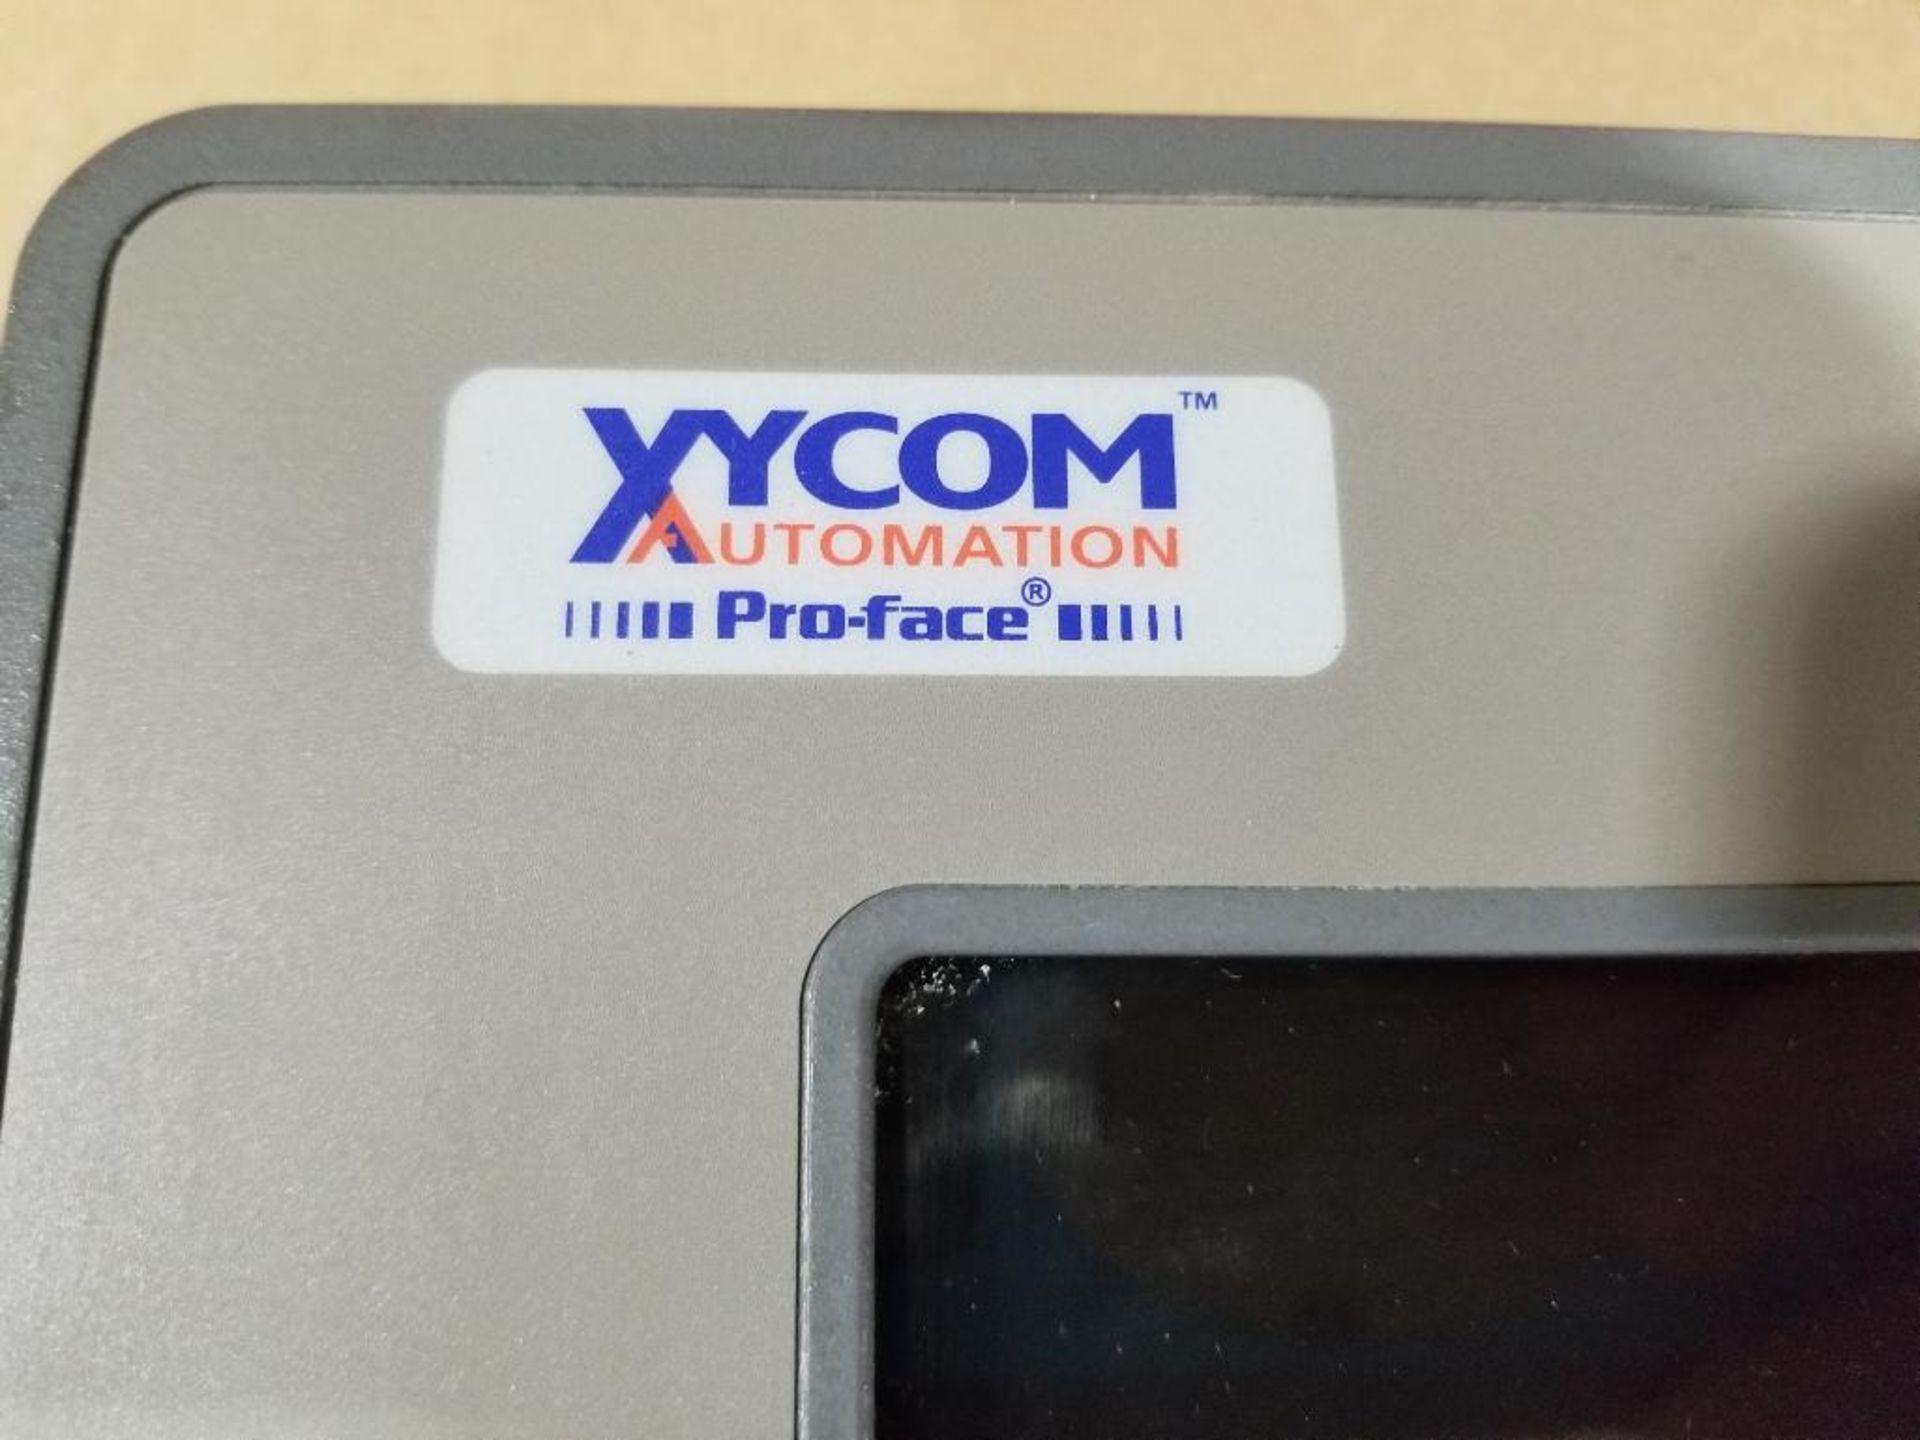 Xycom automation user inteface machine panel. Model XT-1502. - Image 2 of 4